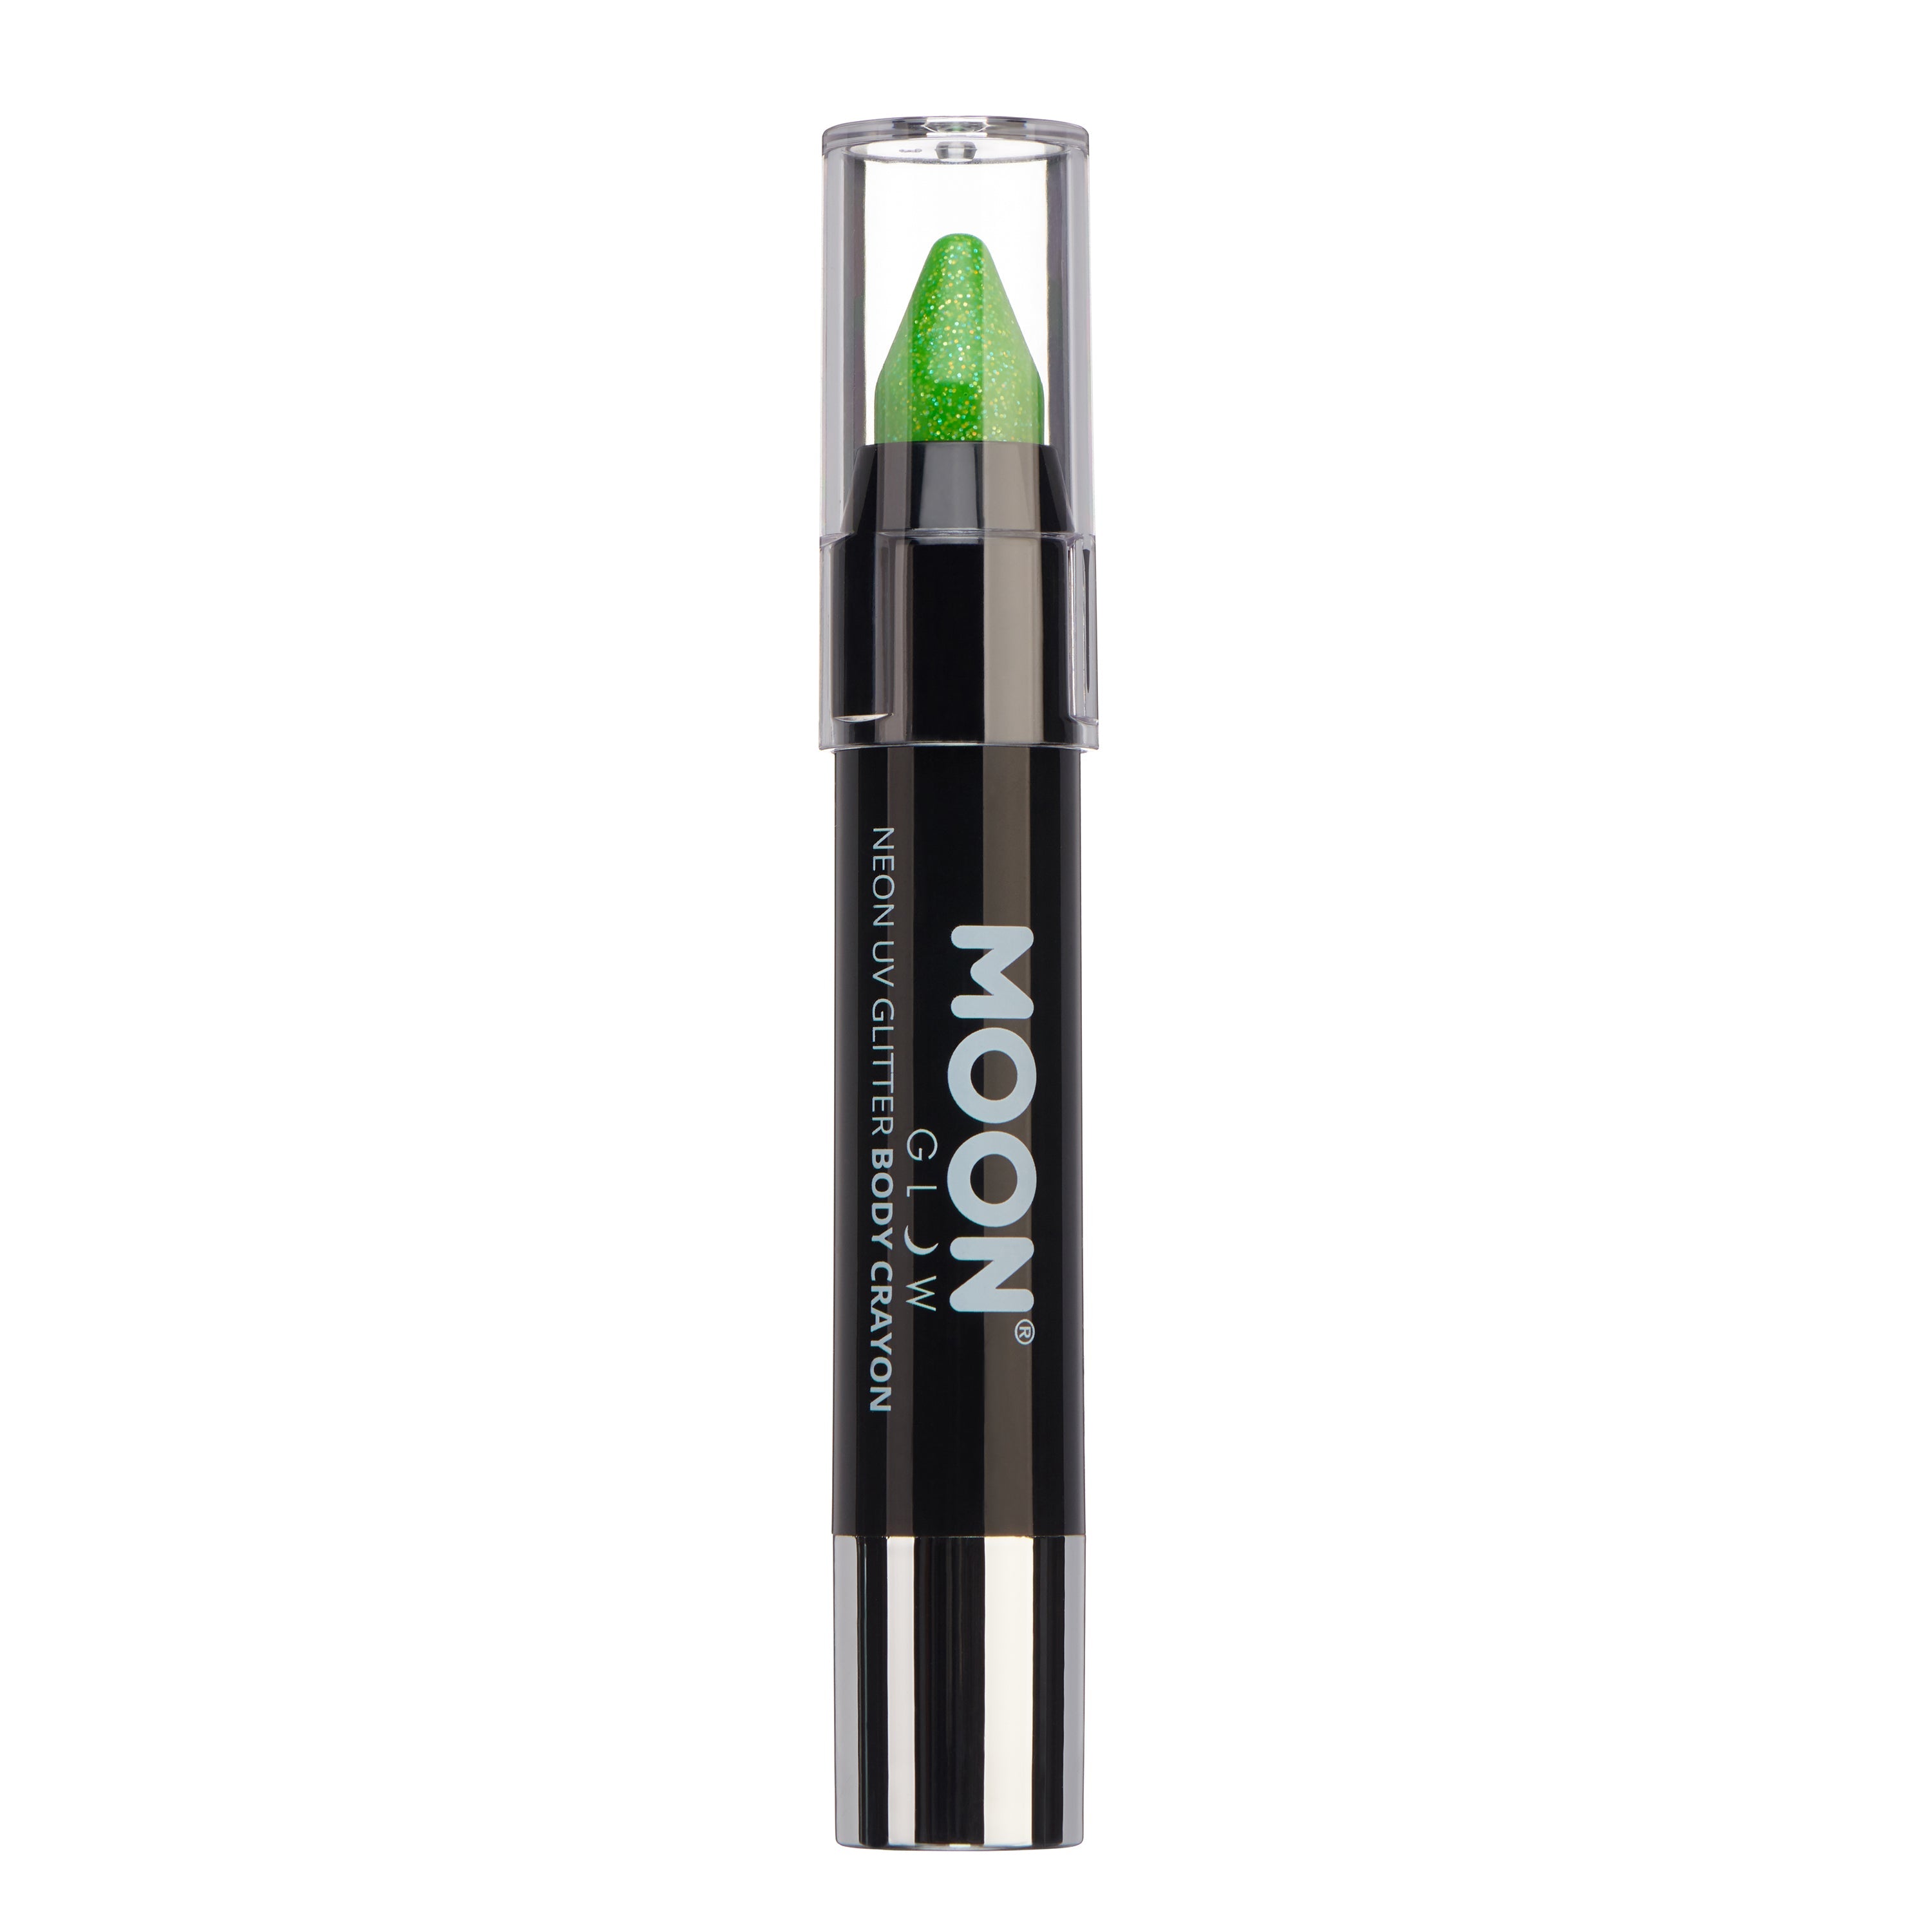 Green - Neon UV Glow Blacklight Glitter Face & Body Crayon, 3.5g. Cosmetically certified, FDA & Health Canada compliant and cruelty free.